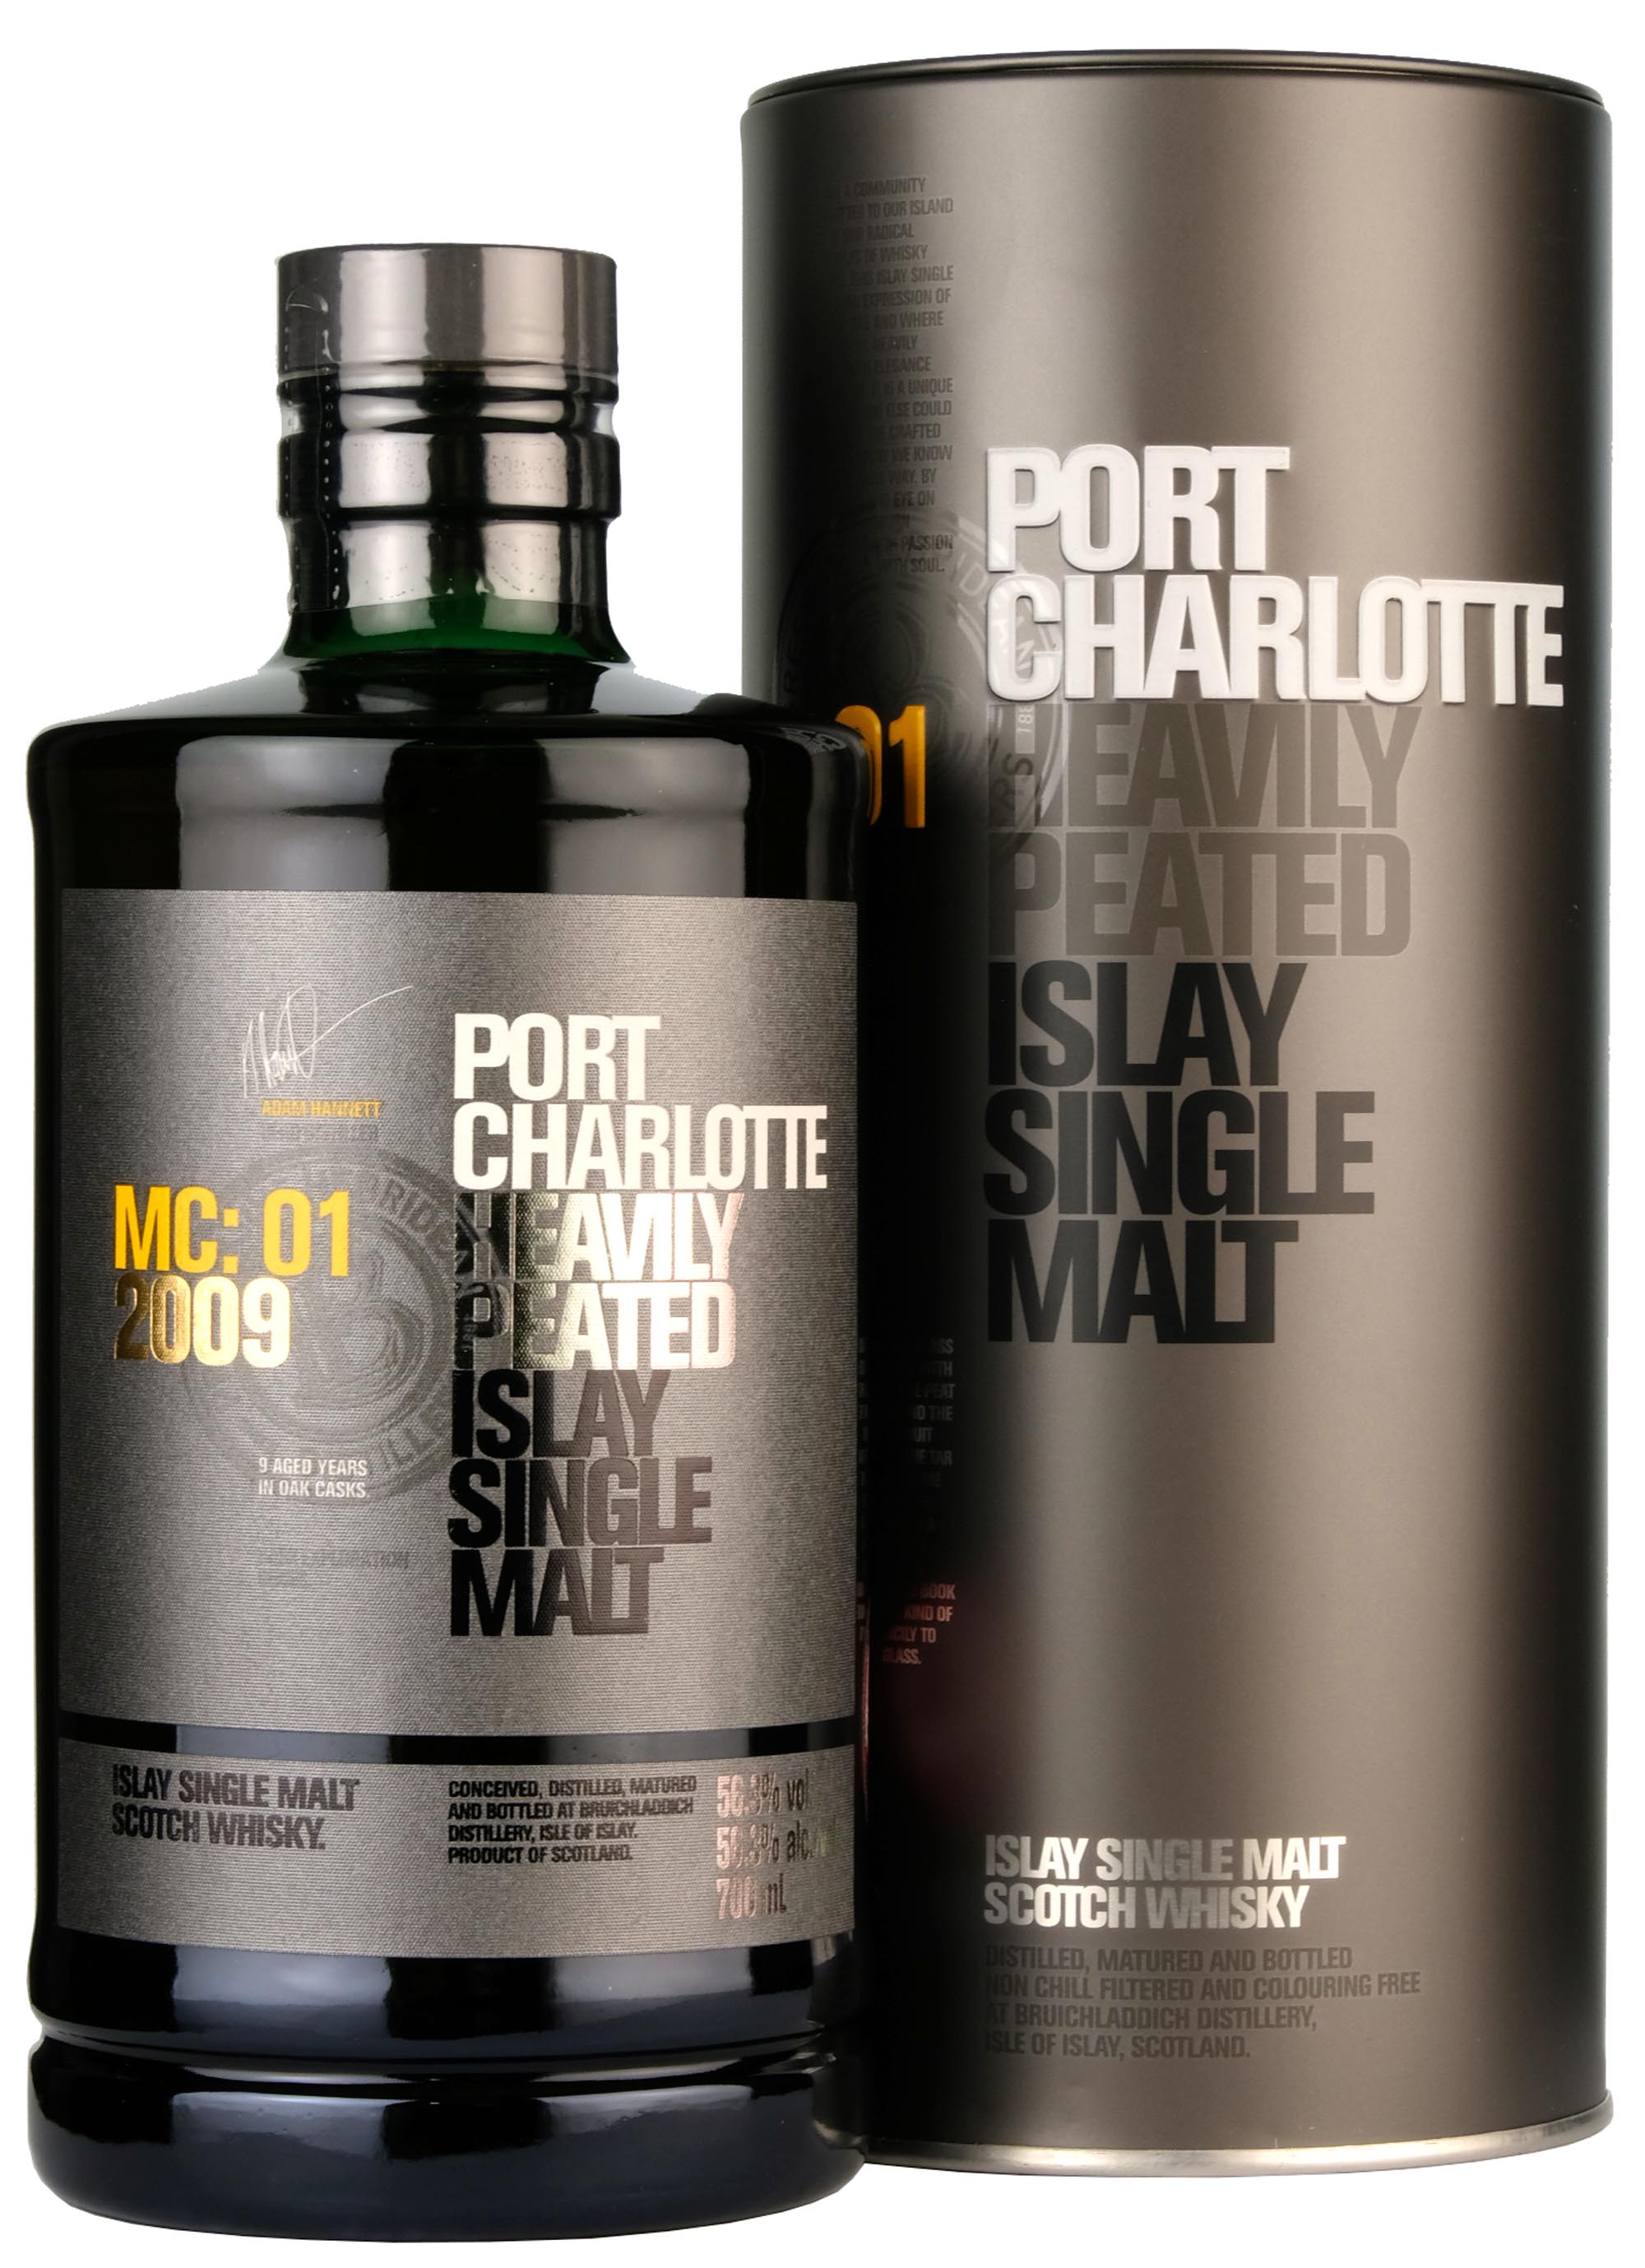 Port Charlotte MC: 01 2009 Whisky